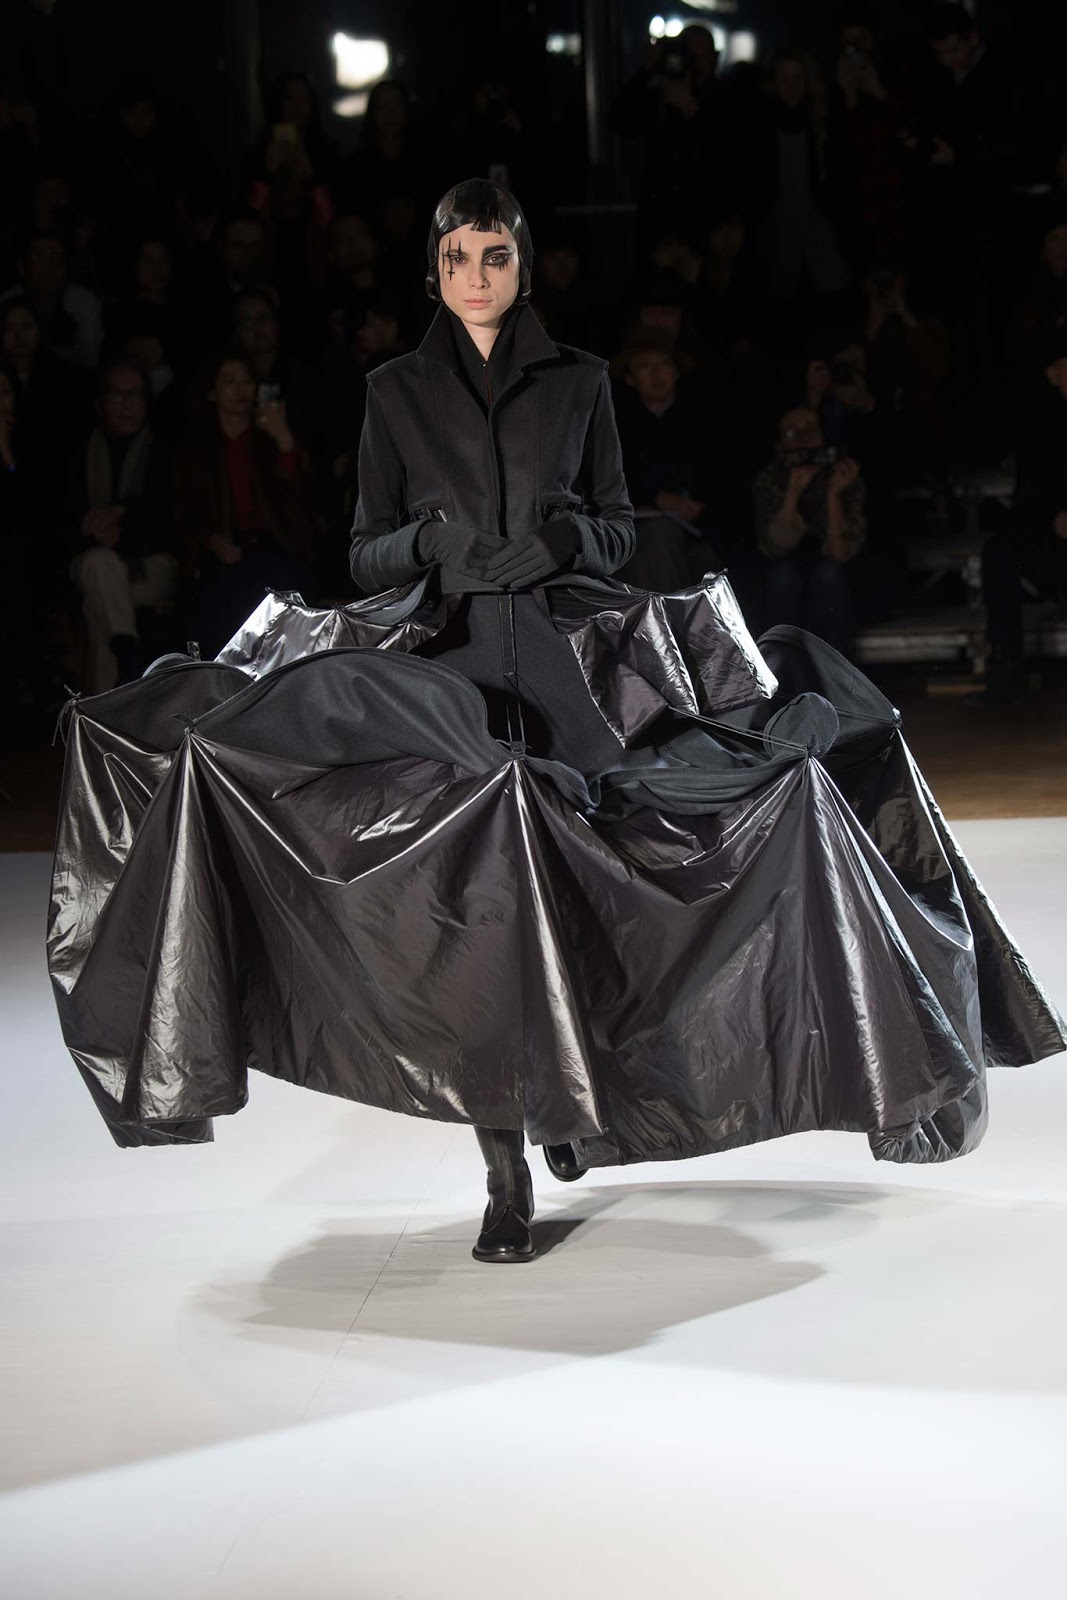 Exposition Art Blog: Avant-garde fashion designer Yohji Yamamoto